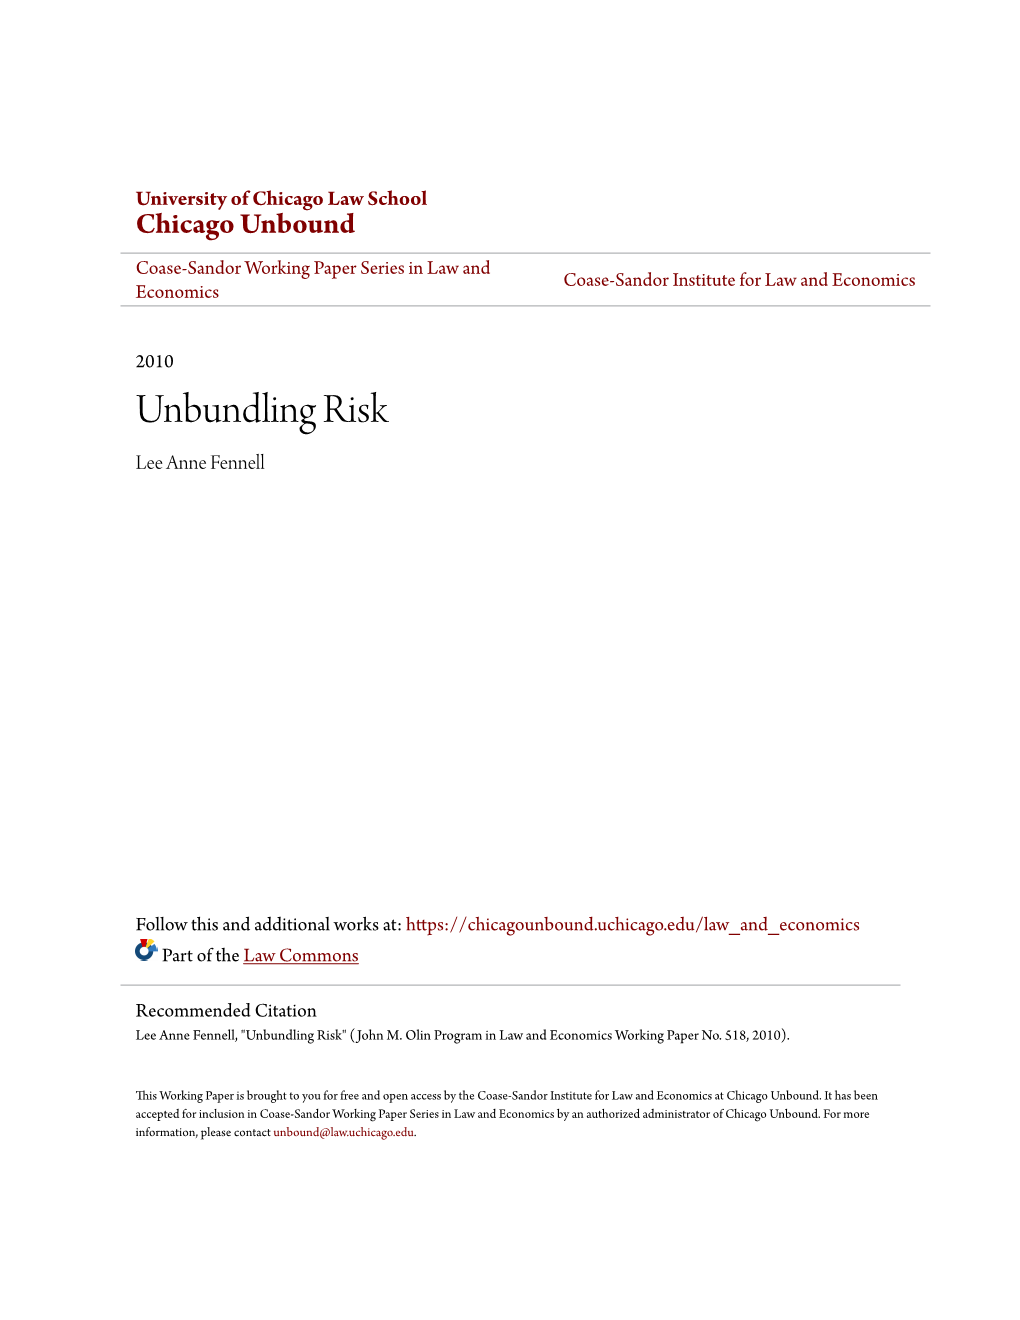 Unbundling Risk Lee Anne Fennell